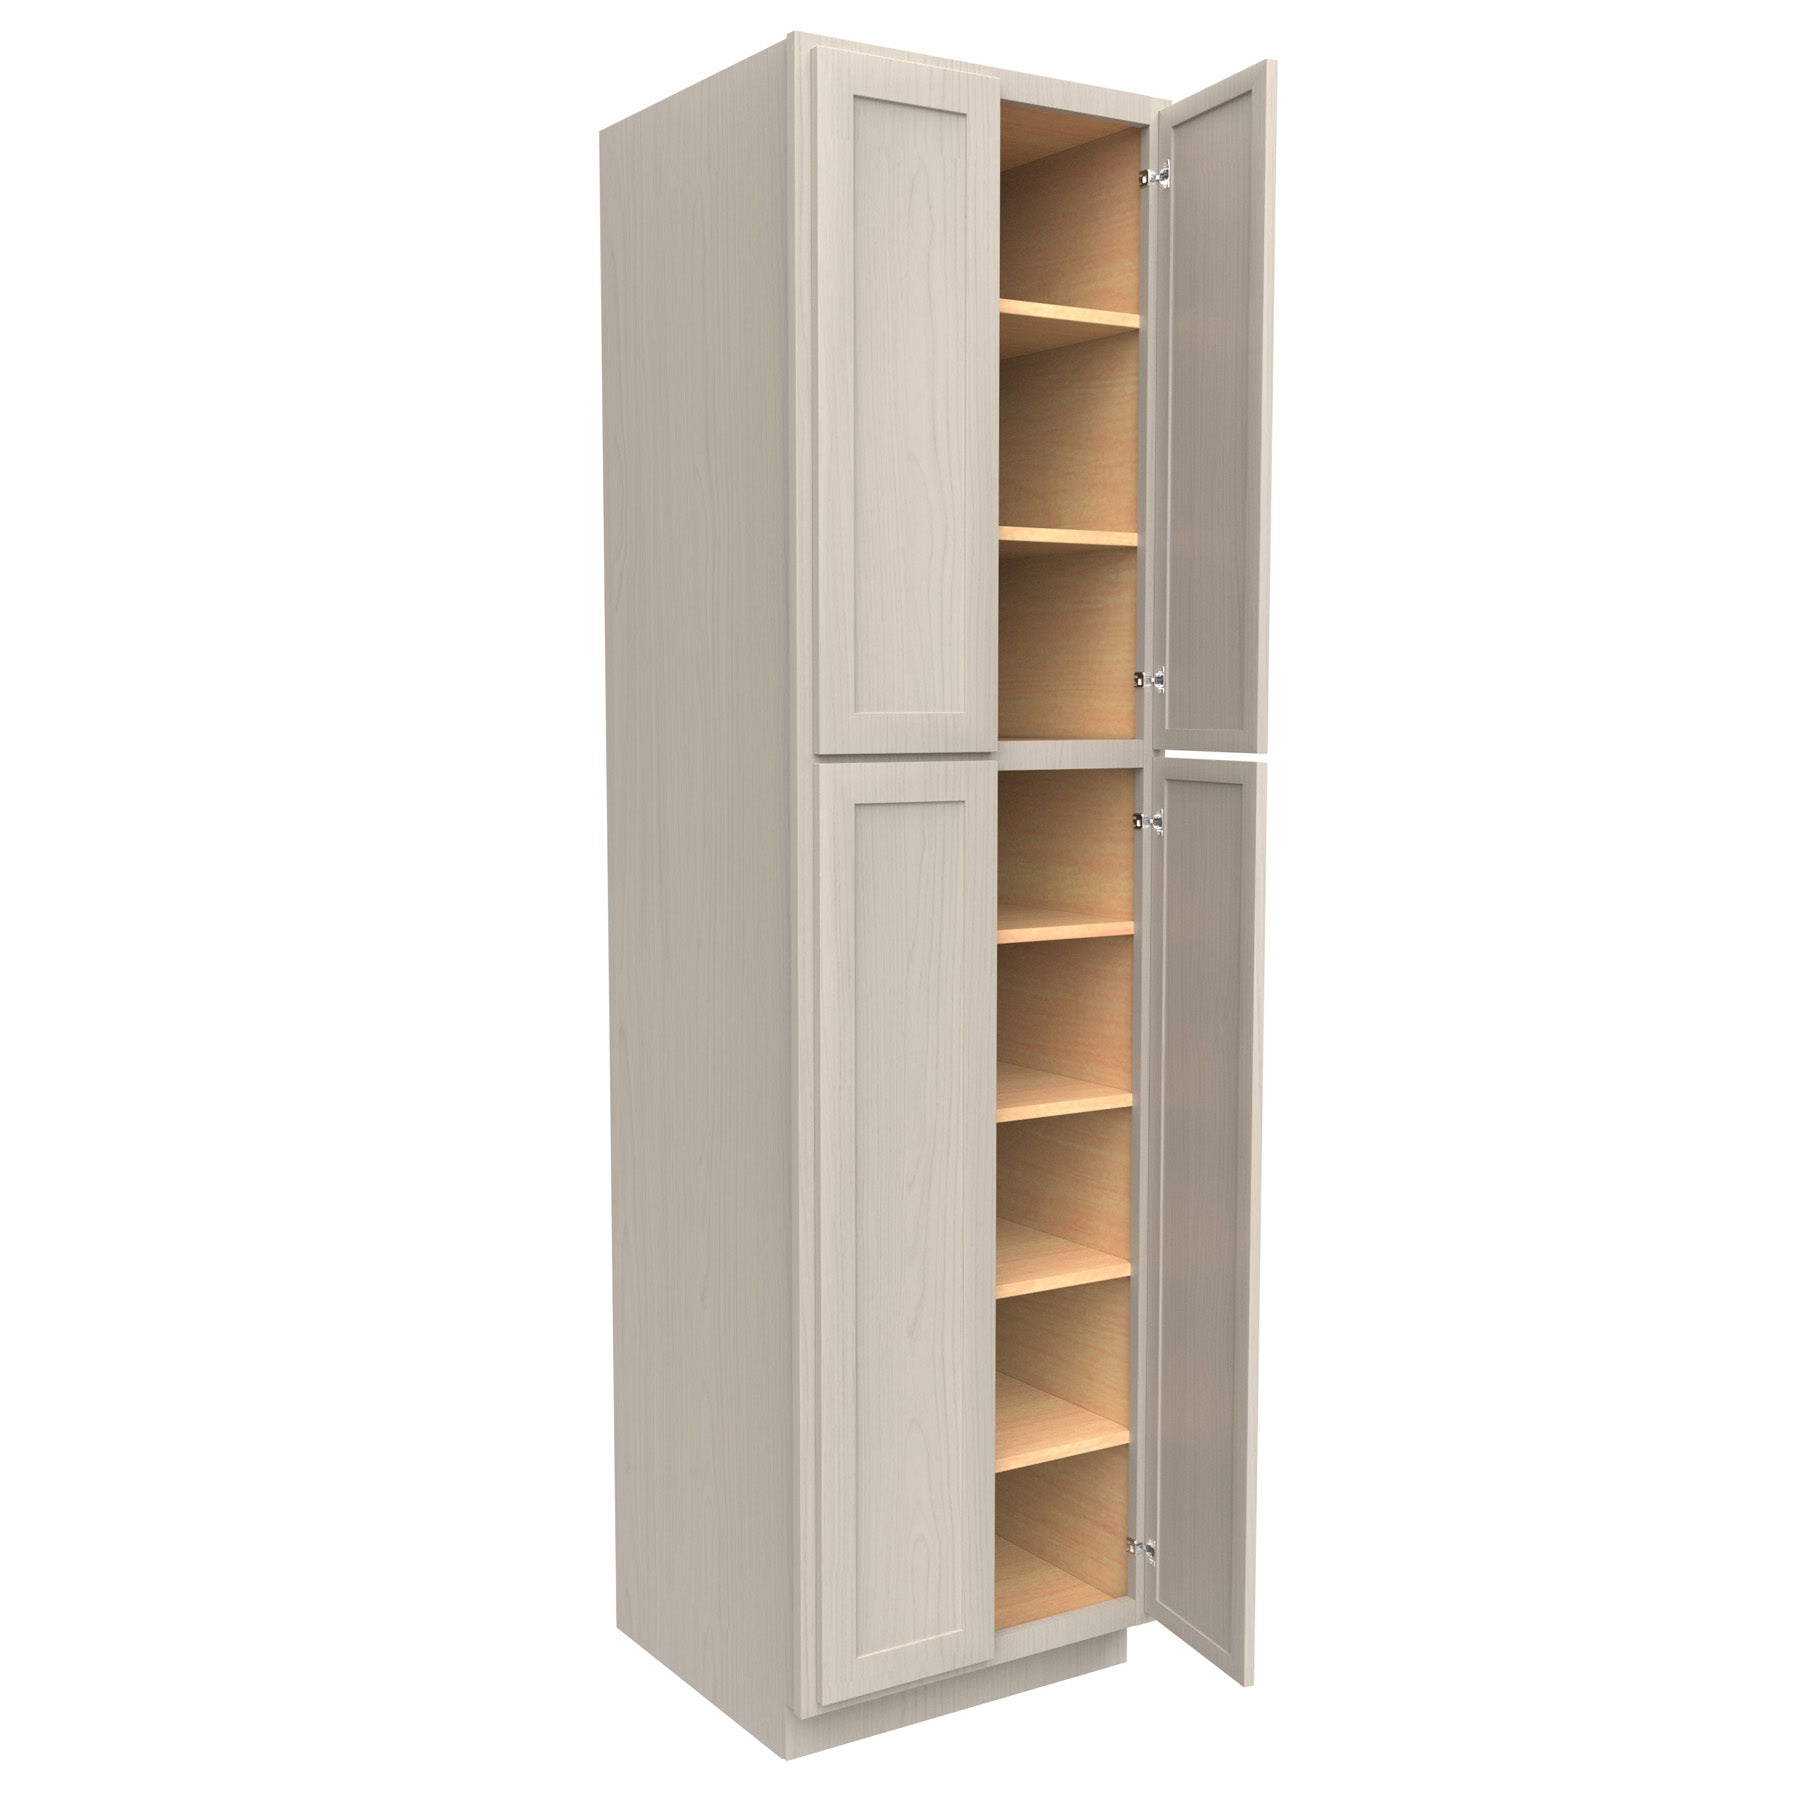 Double Door Utility Cabinet | Elegant Stone|24W x 90H x 24D